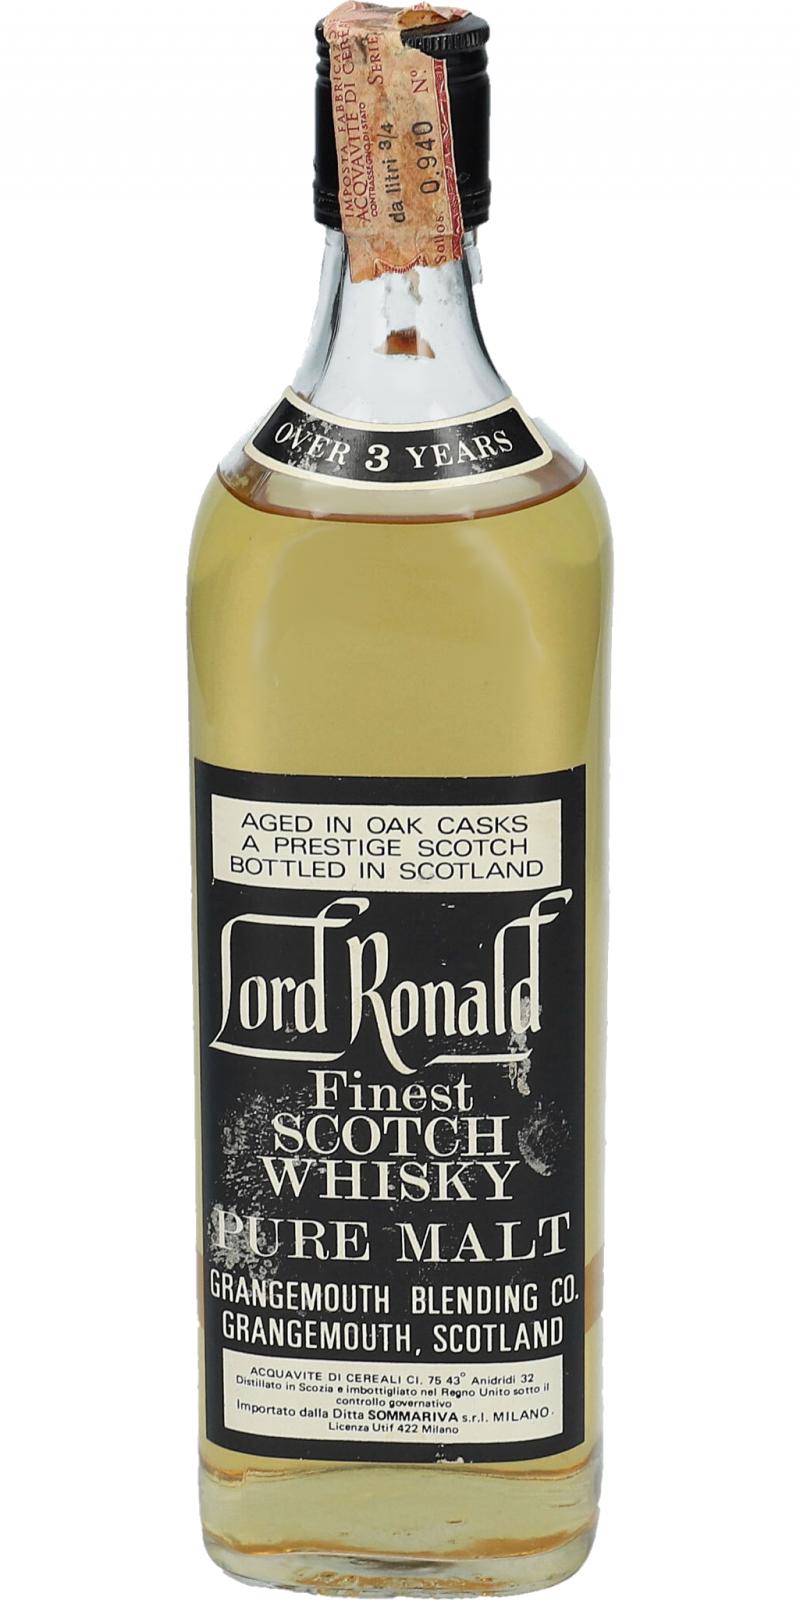 Lord Ronald Finest Scotch Whisky